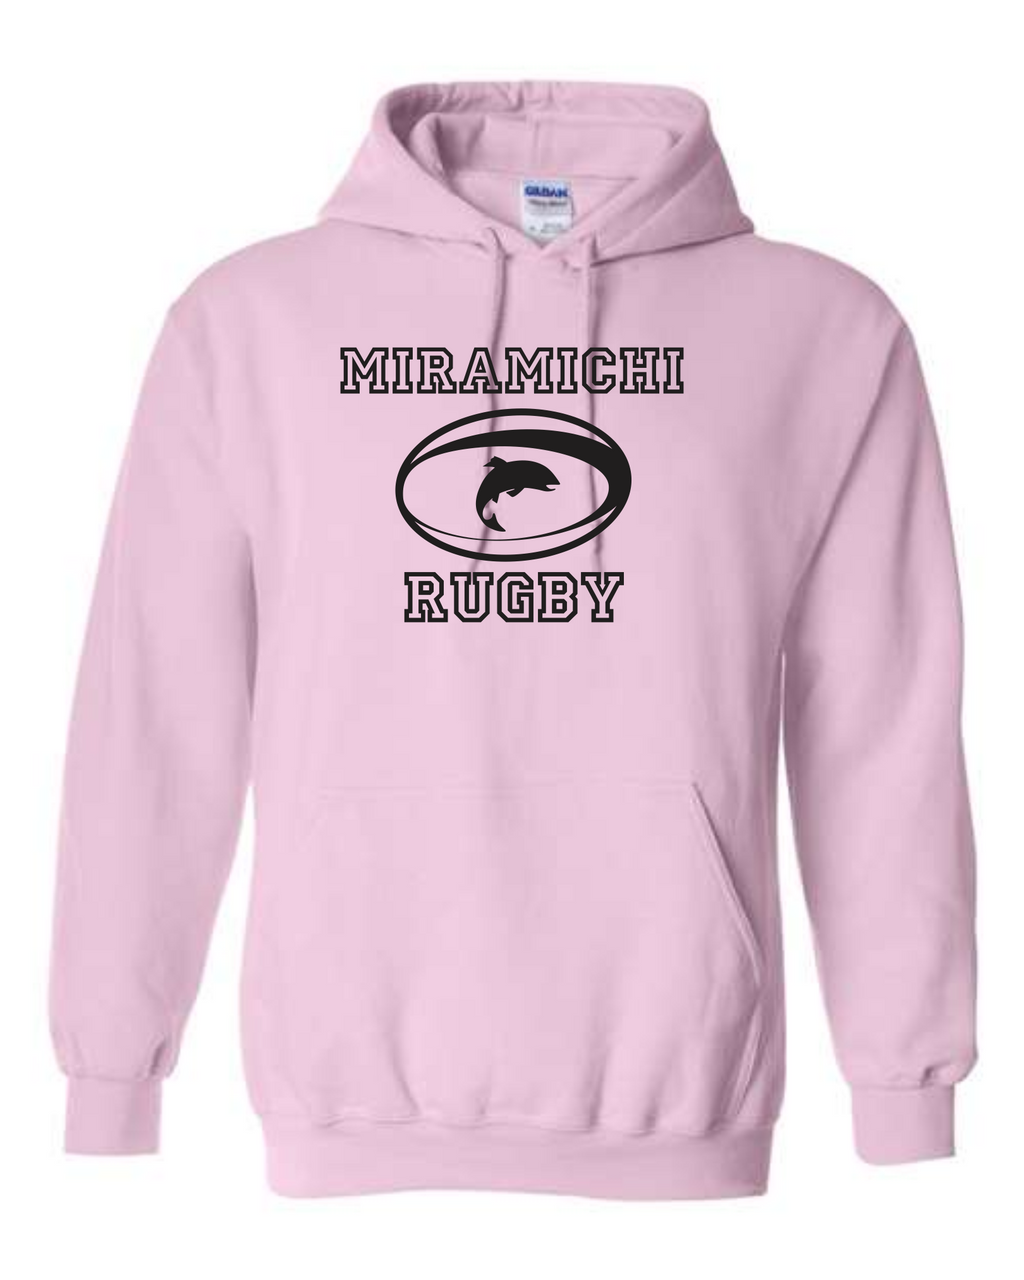 Miramichi Rugby - Pink - Cotton Hoodie